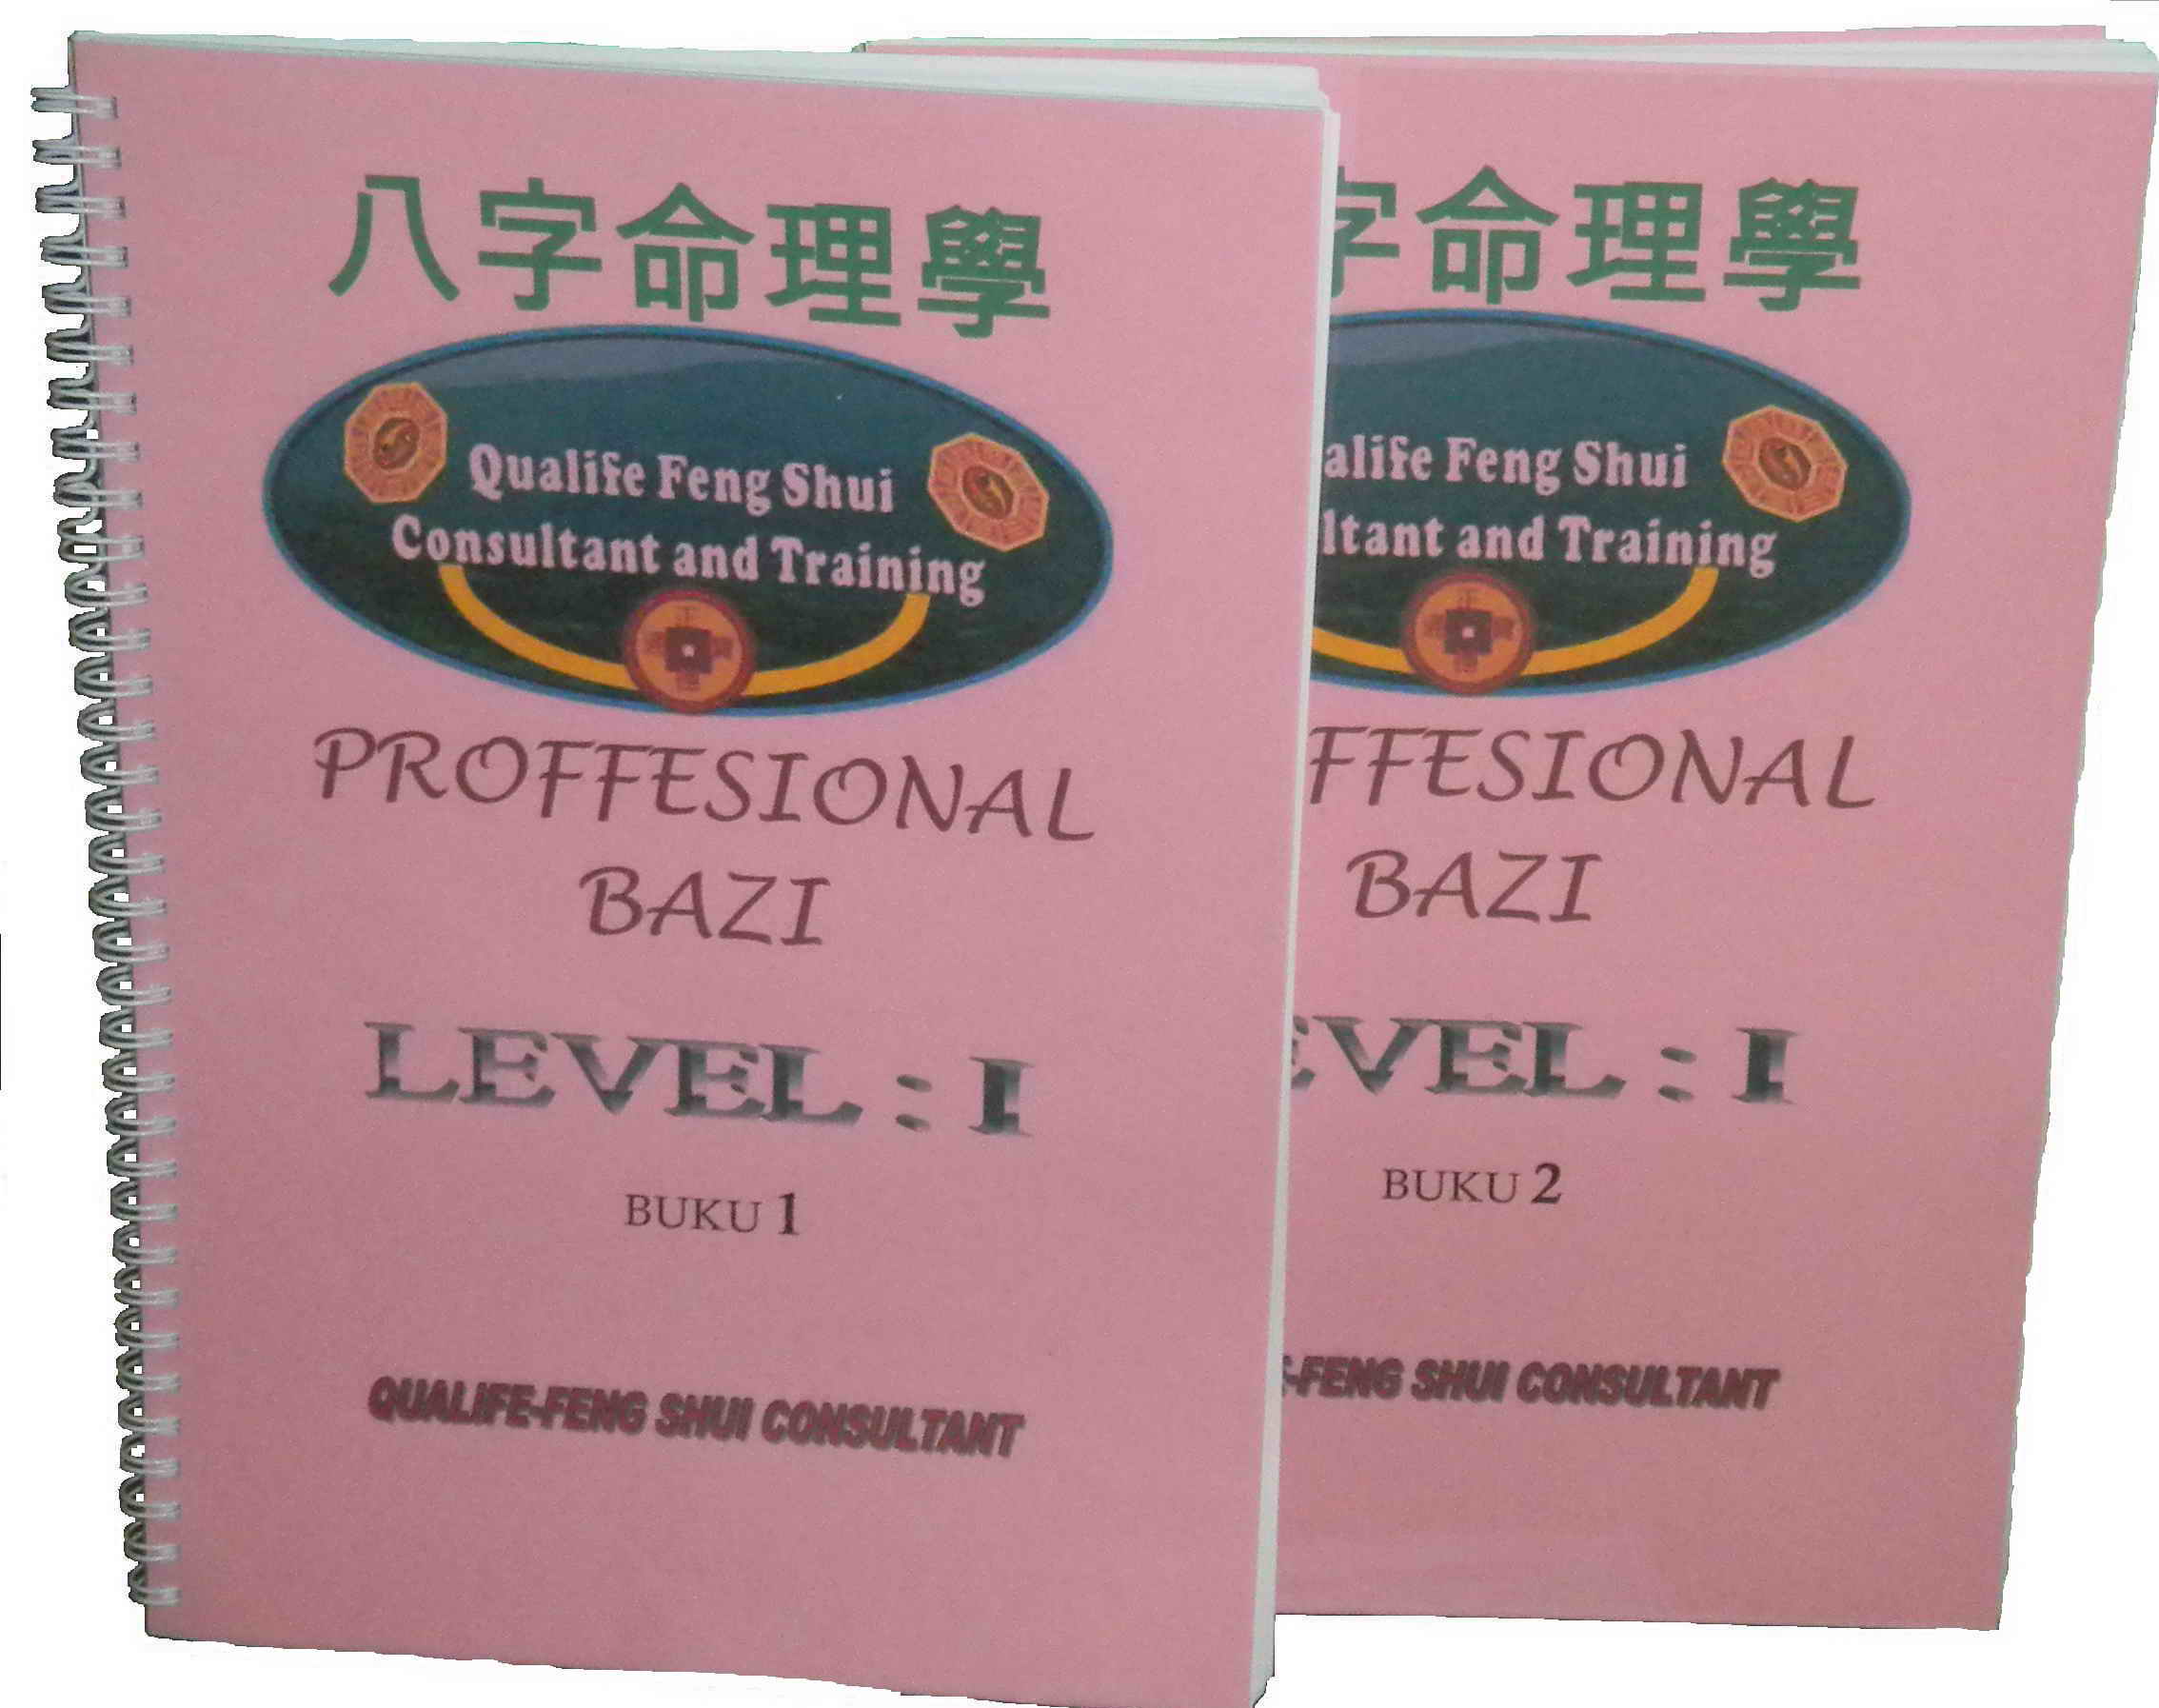 Bazi Profesional Level 1 Qualife Fengshui